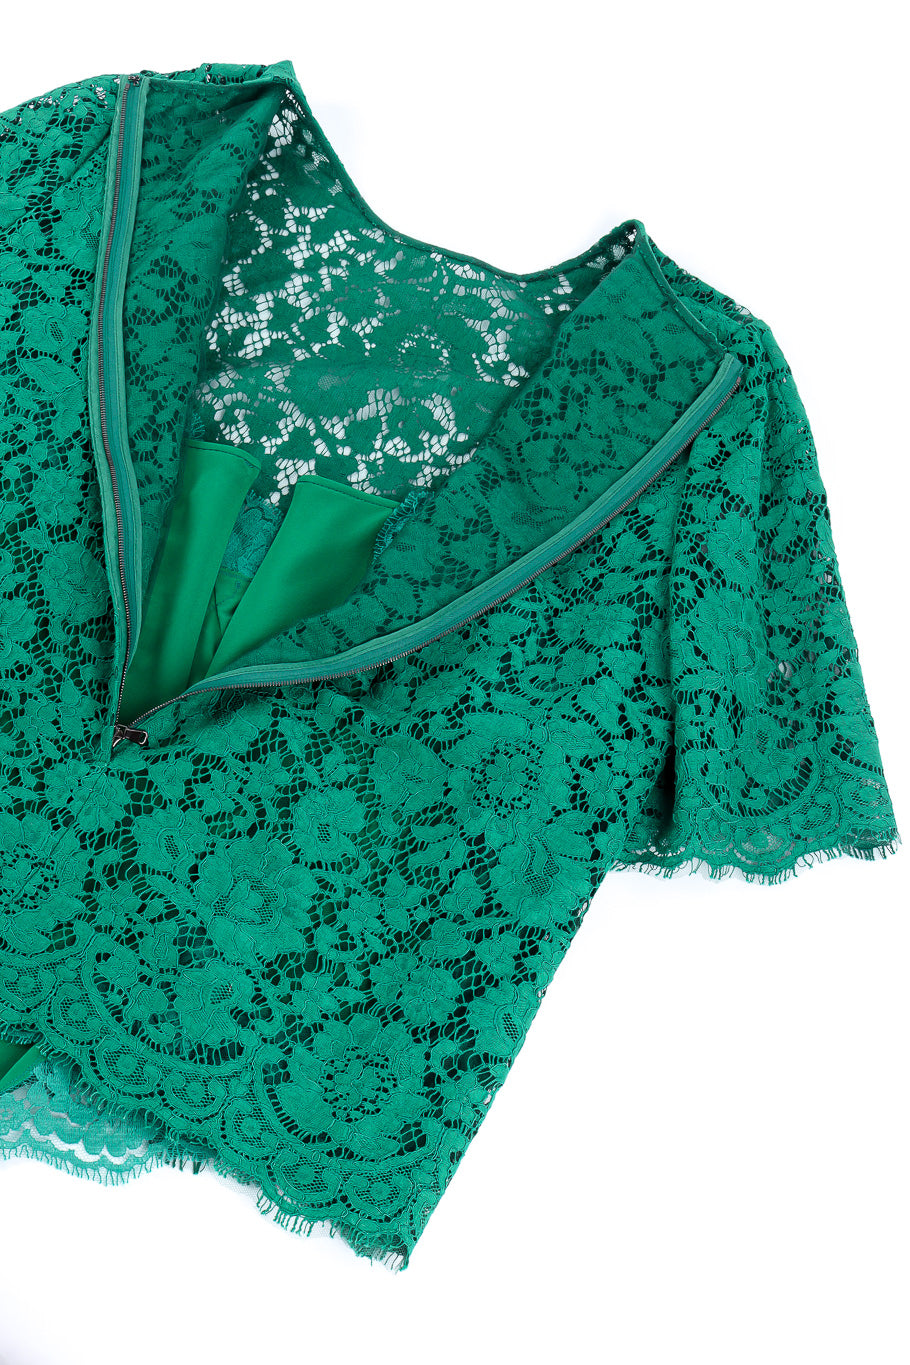 Dolce & Gabbana soutache lace top back zipper @recessla